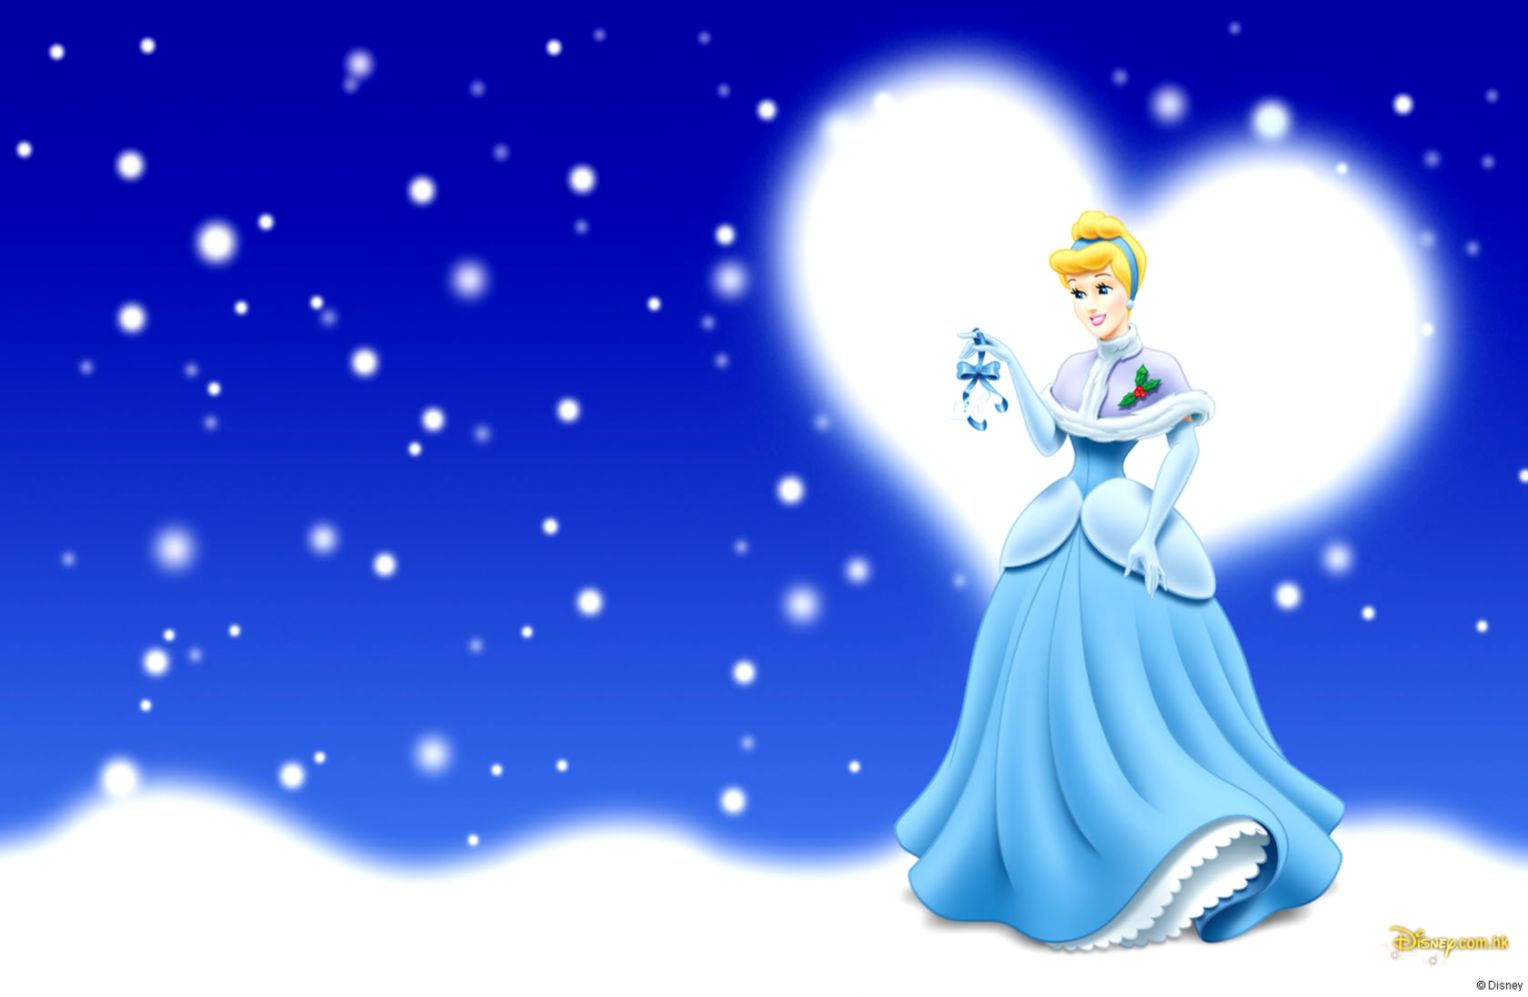 Cinderella Disney Princess Full Hd Image Wallpaper - Cinderella Wallpaper  Images Princess Animation - 1528x997 Wallpaper 